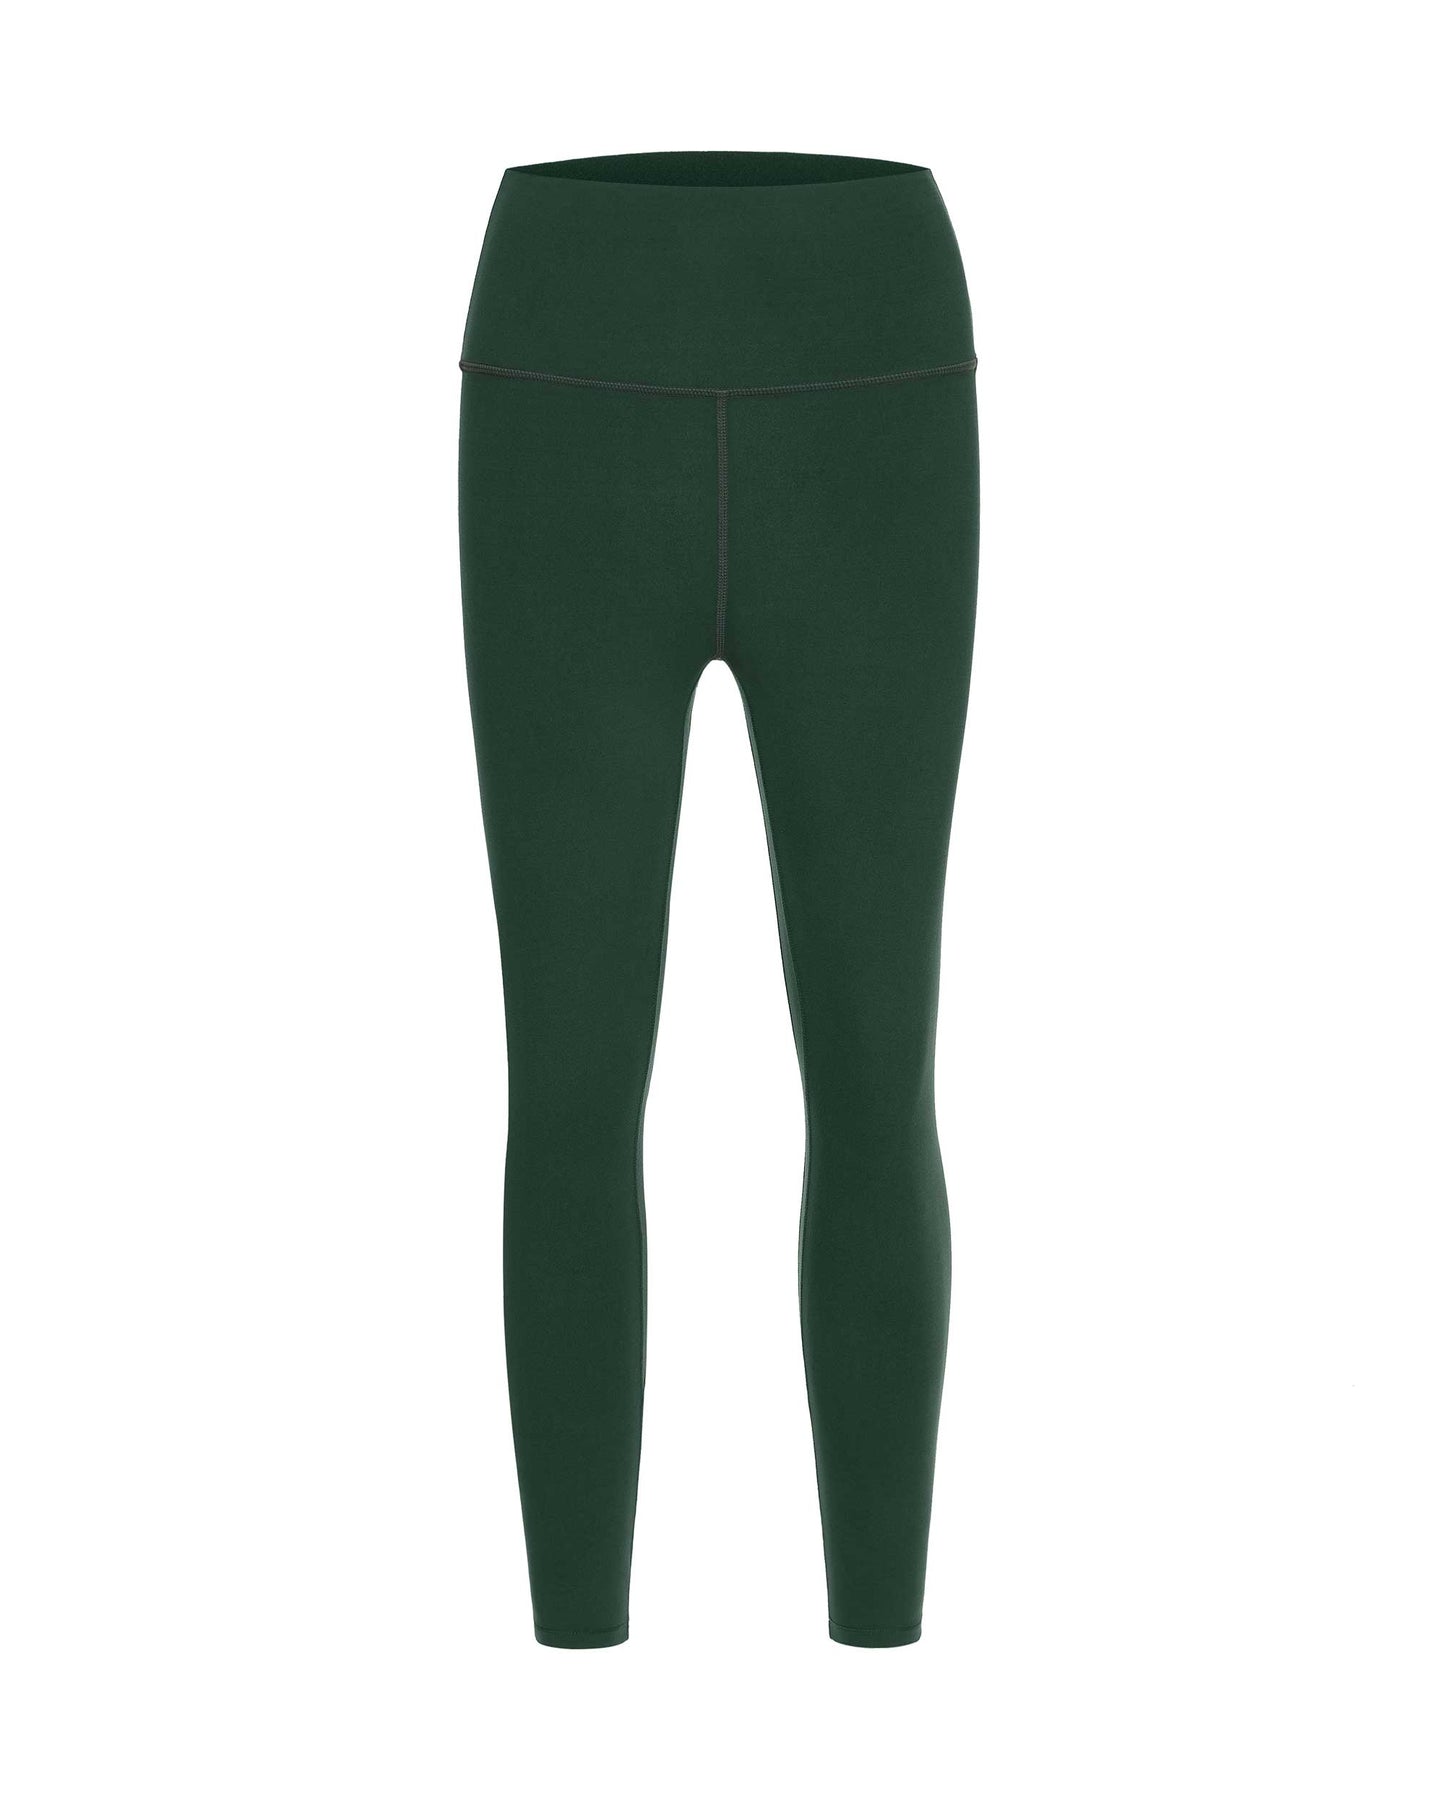 flat lay of green leggings